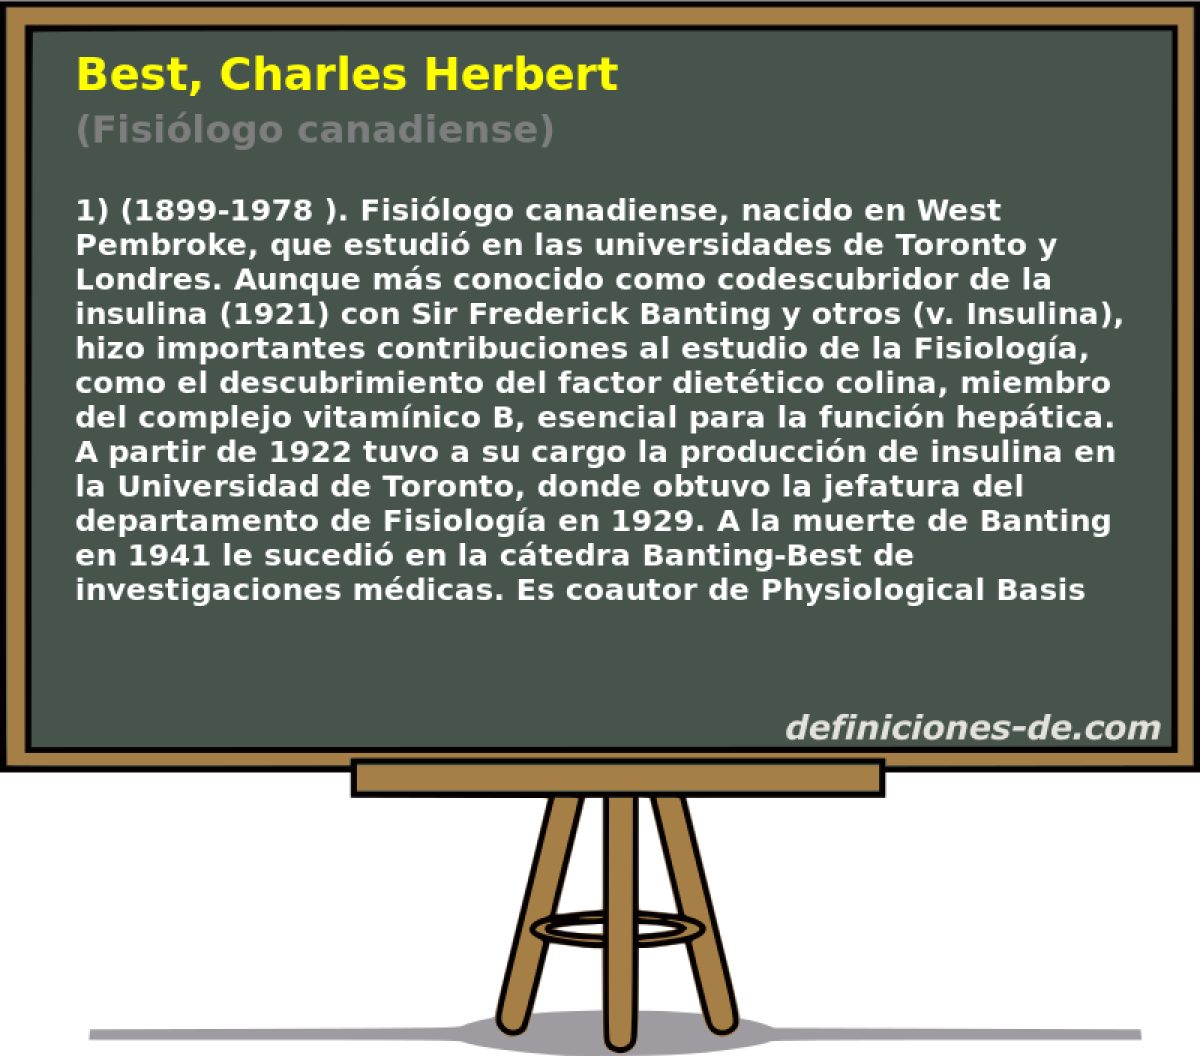 Best, Charles Herbert (Fisilogo canadiense)